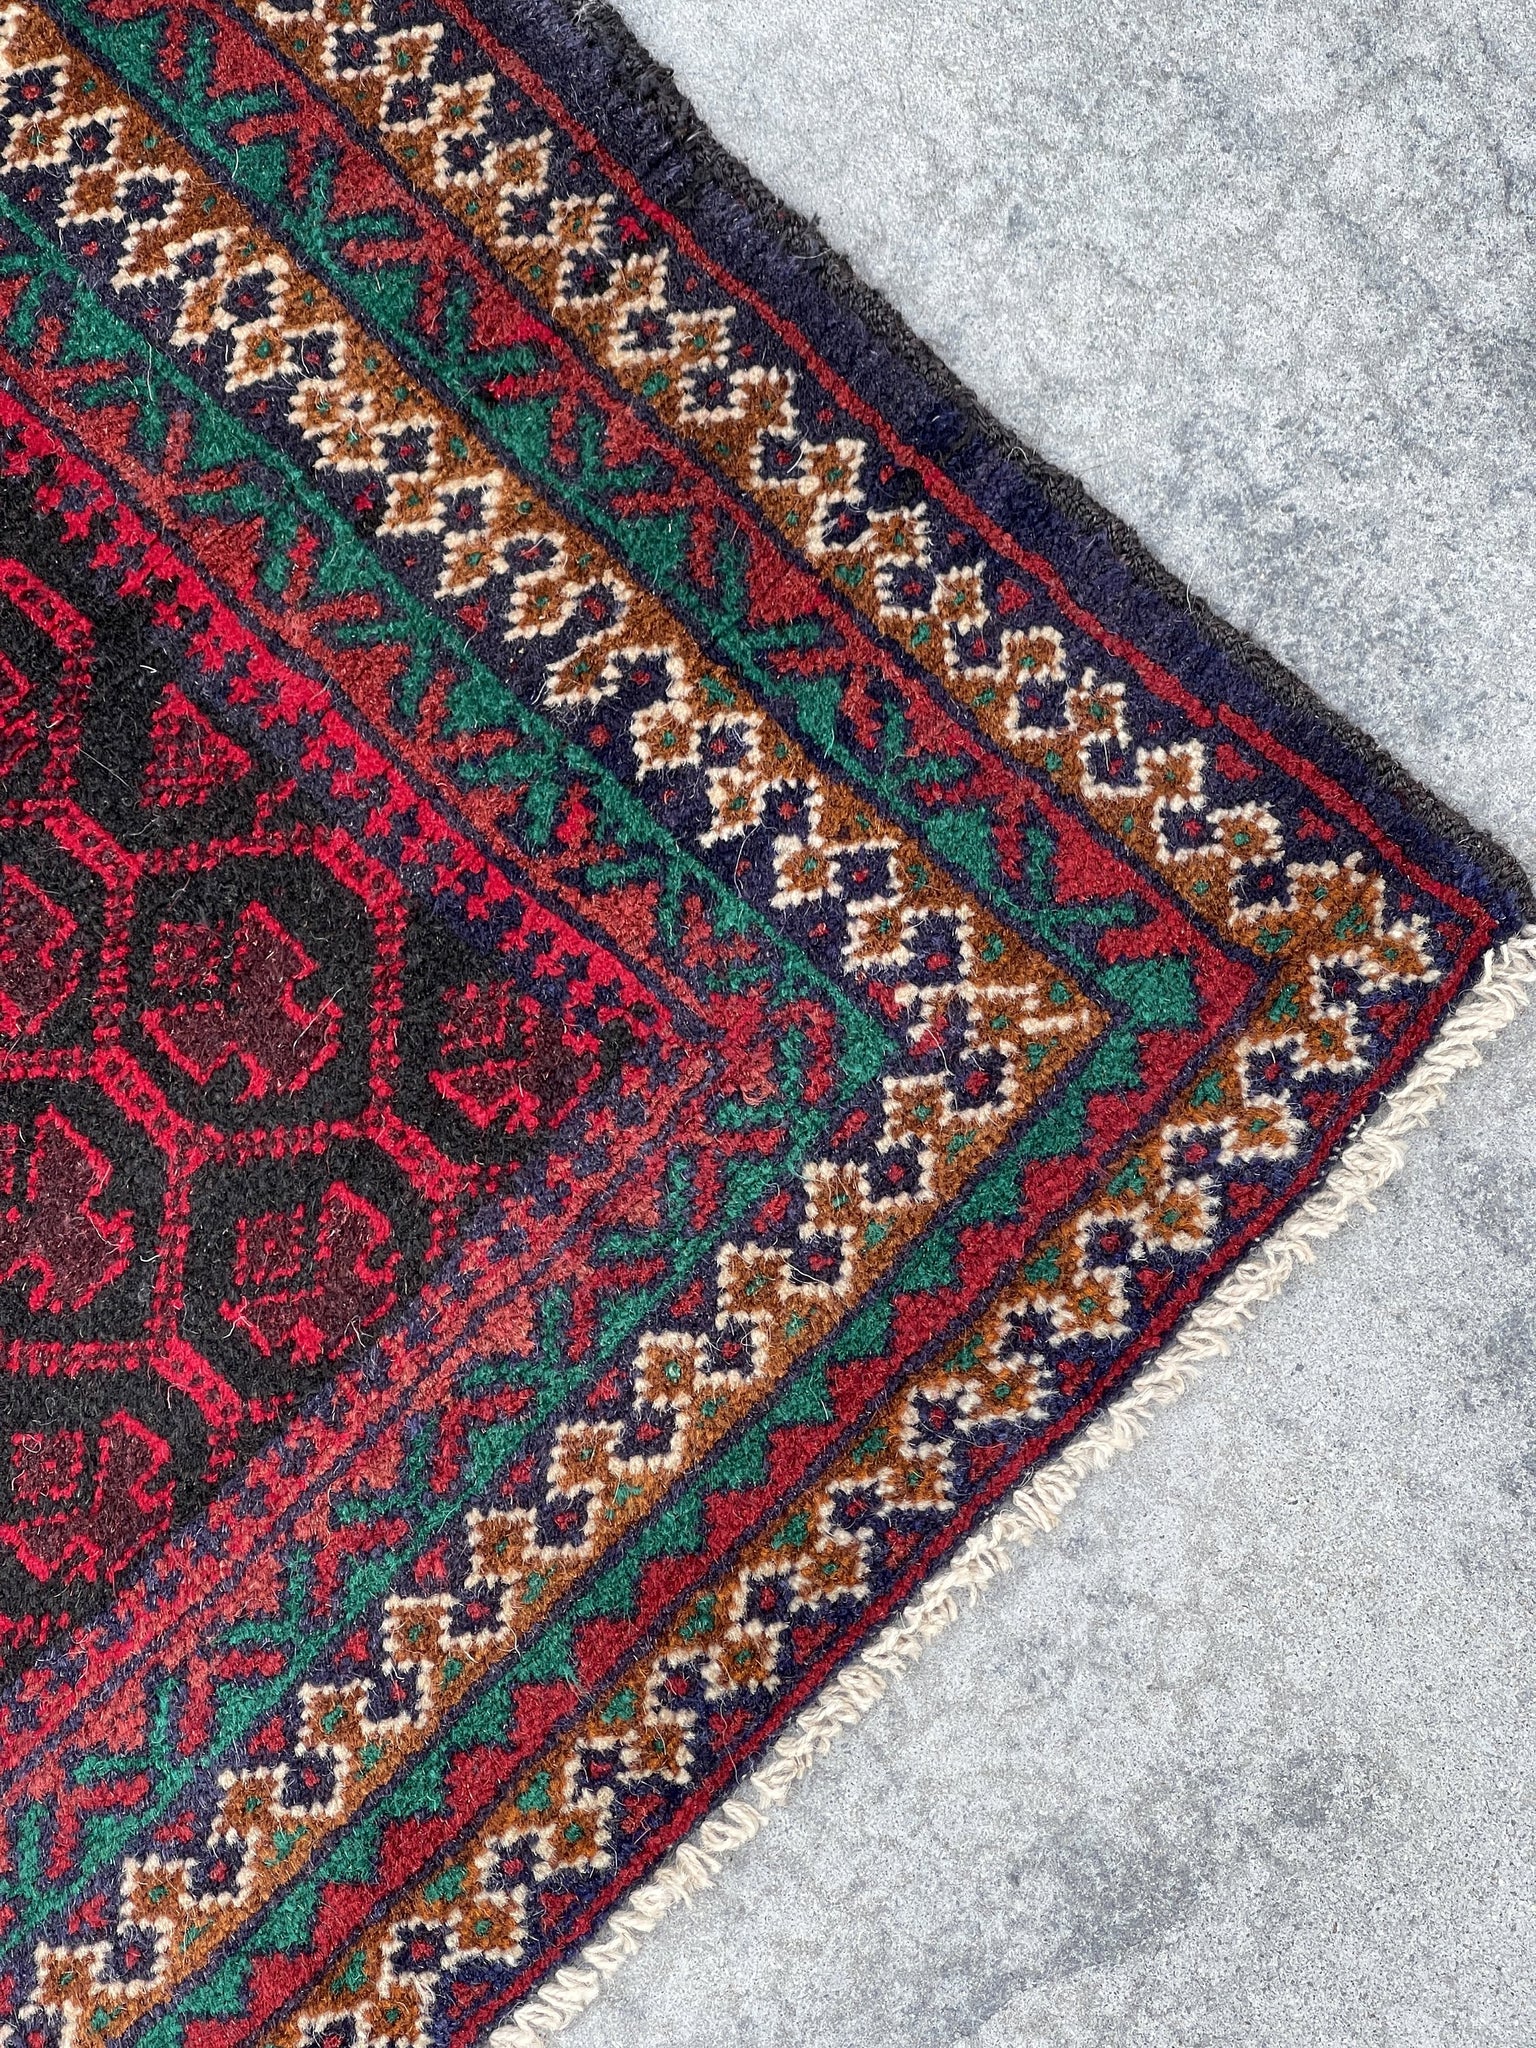 3x5 (90x150) Handmade Vintage Afghan Rug | Indigo Red Brown White Turquoise | Nomadic Baluch Boho Bohemian Tribal Turkish Moroccan Wool